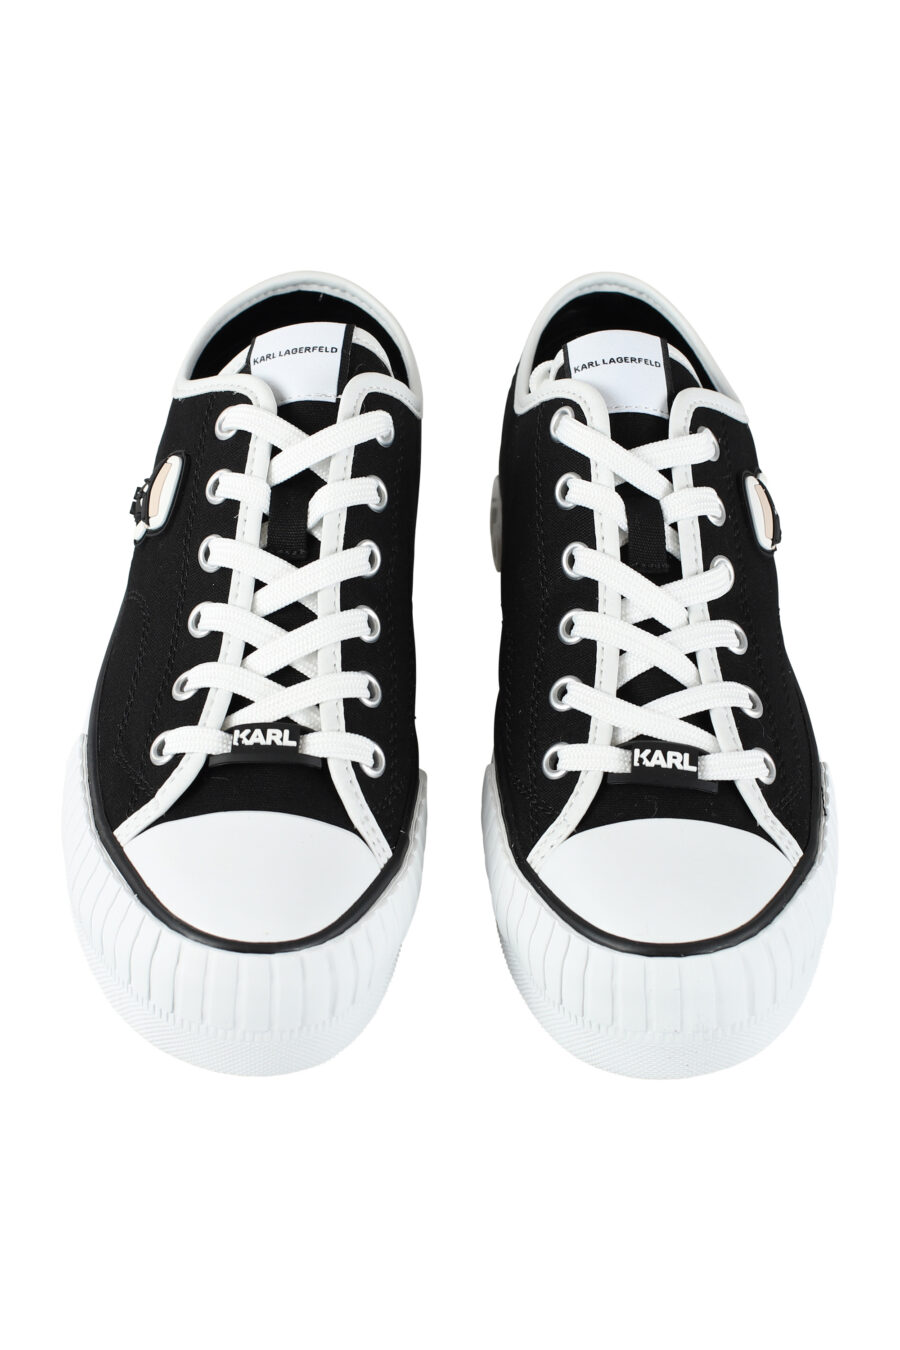 Zapatillas negras estilo converse con logo "karl" en goma - IMG 9614